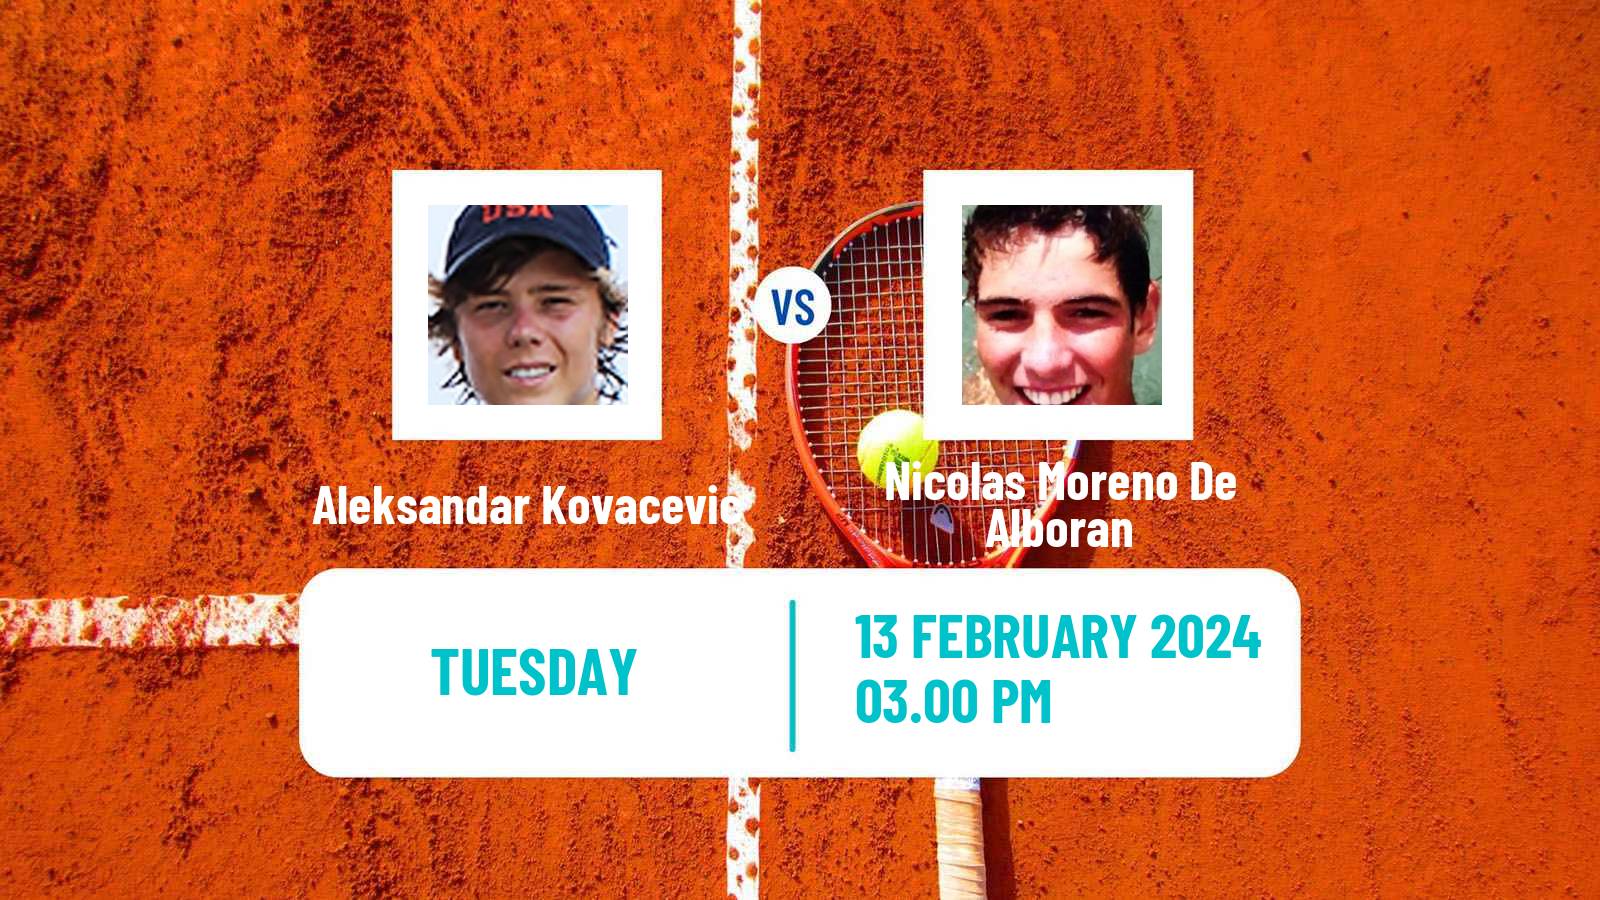 Tennis ATP Delray Beach Aleksandar Kovacevic - Nicolas Moreno De Alboran